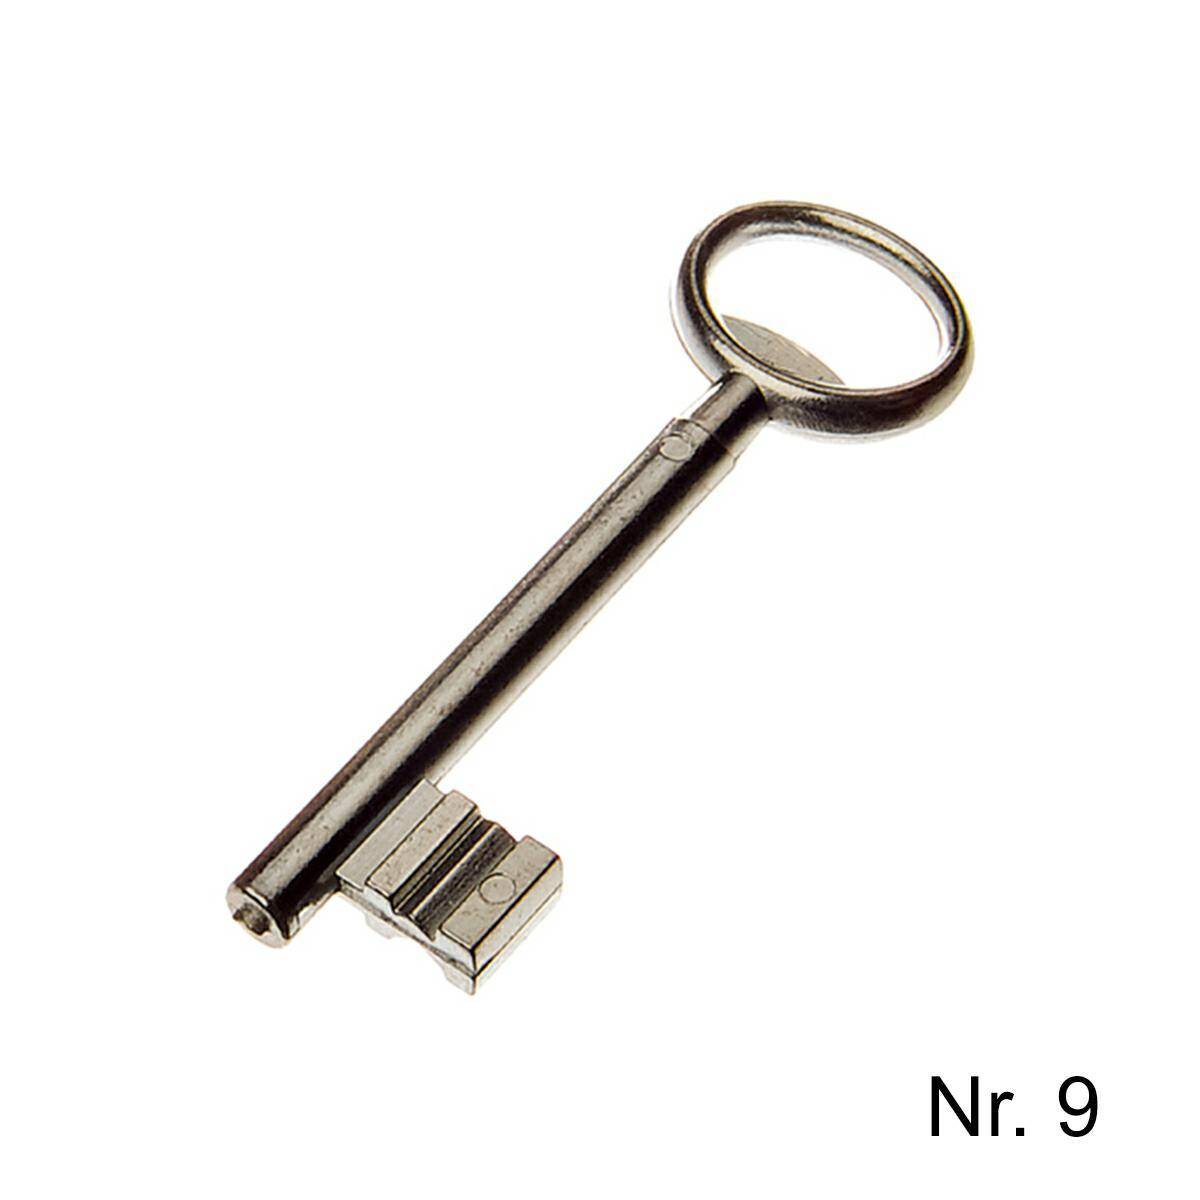 Cast key Jania for the lock - No. 9